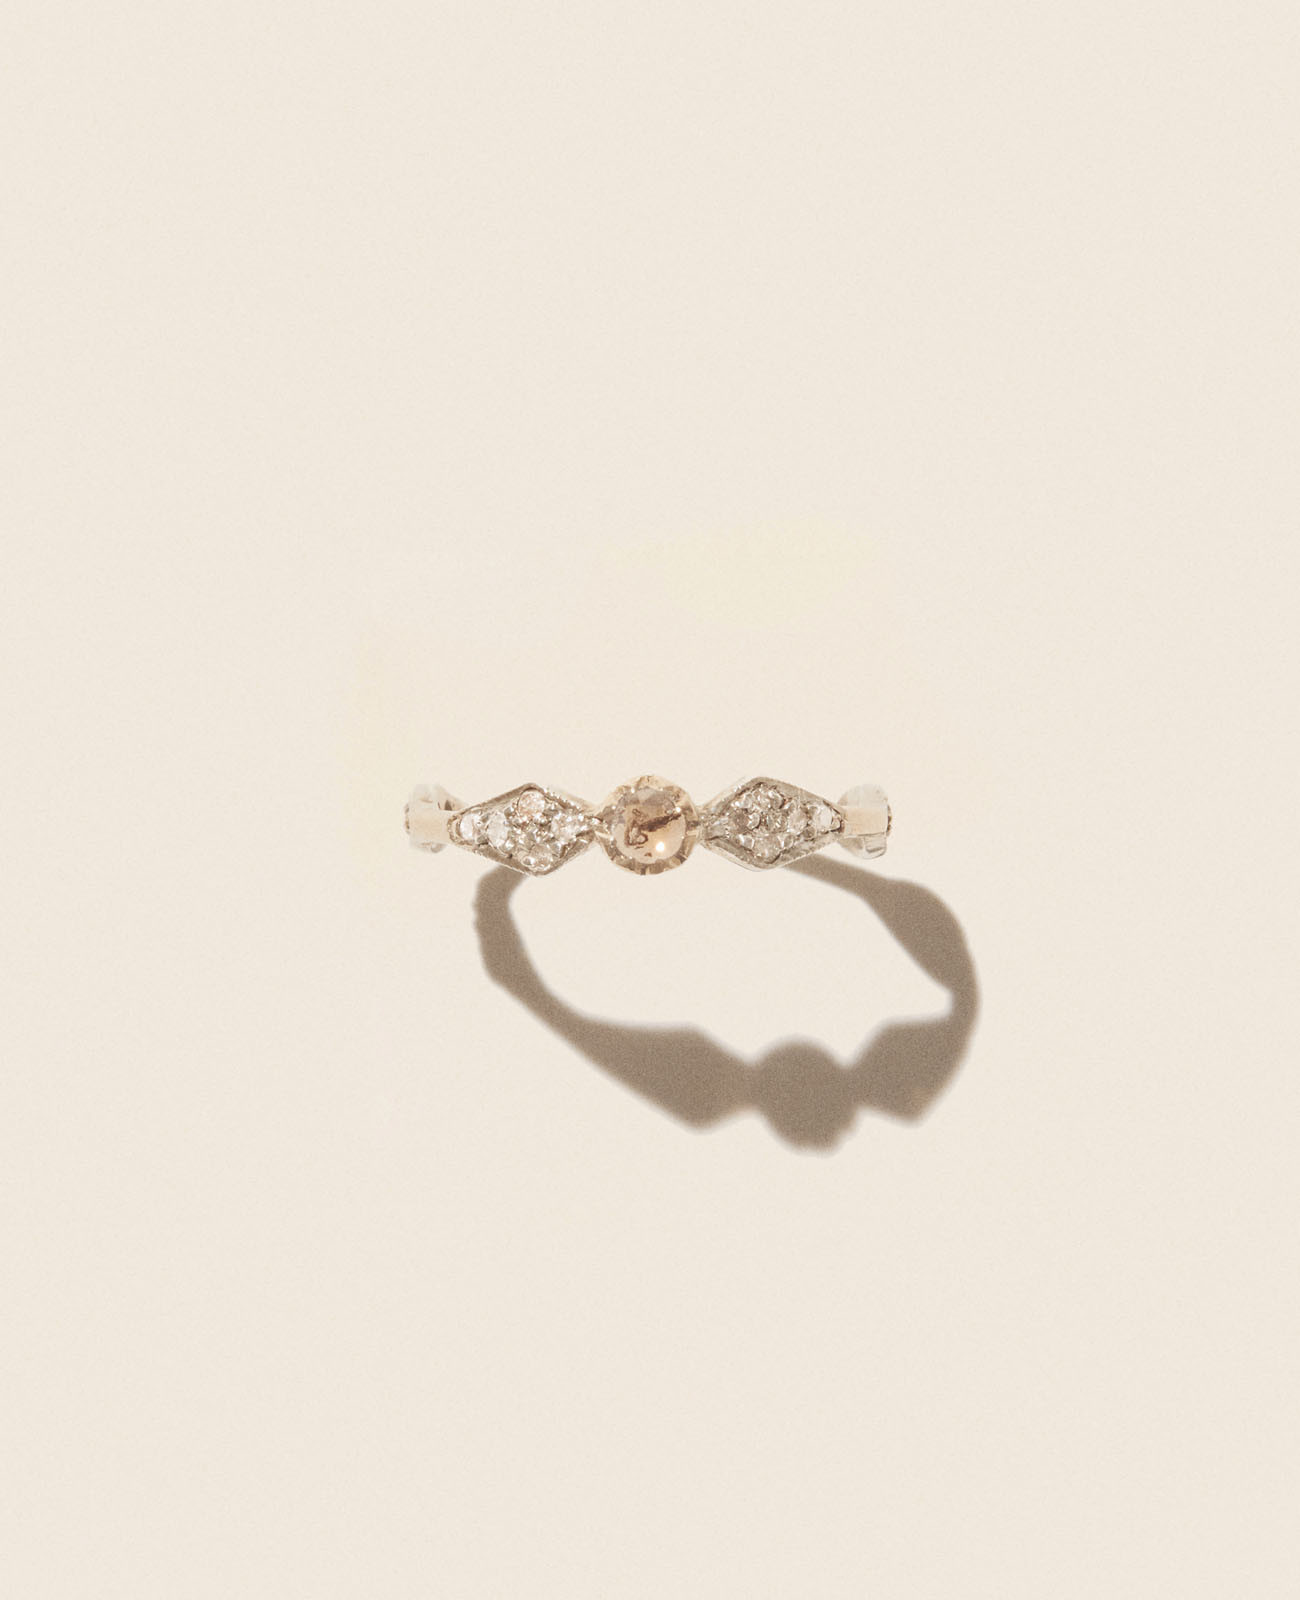 ADELE N°1 DIAMOND ring pascale monvoisin jewelry paris